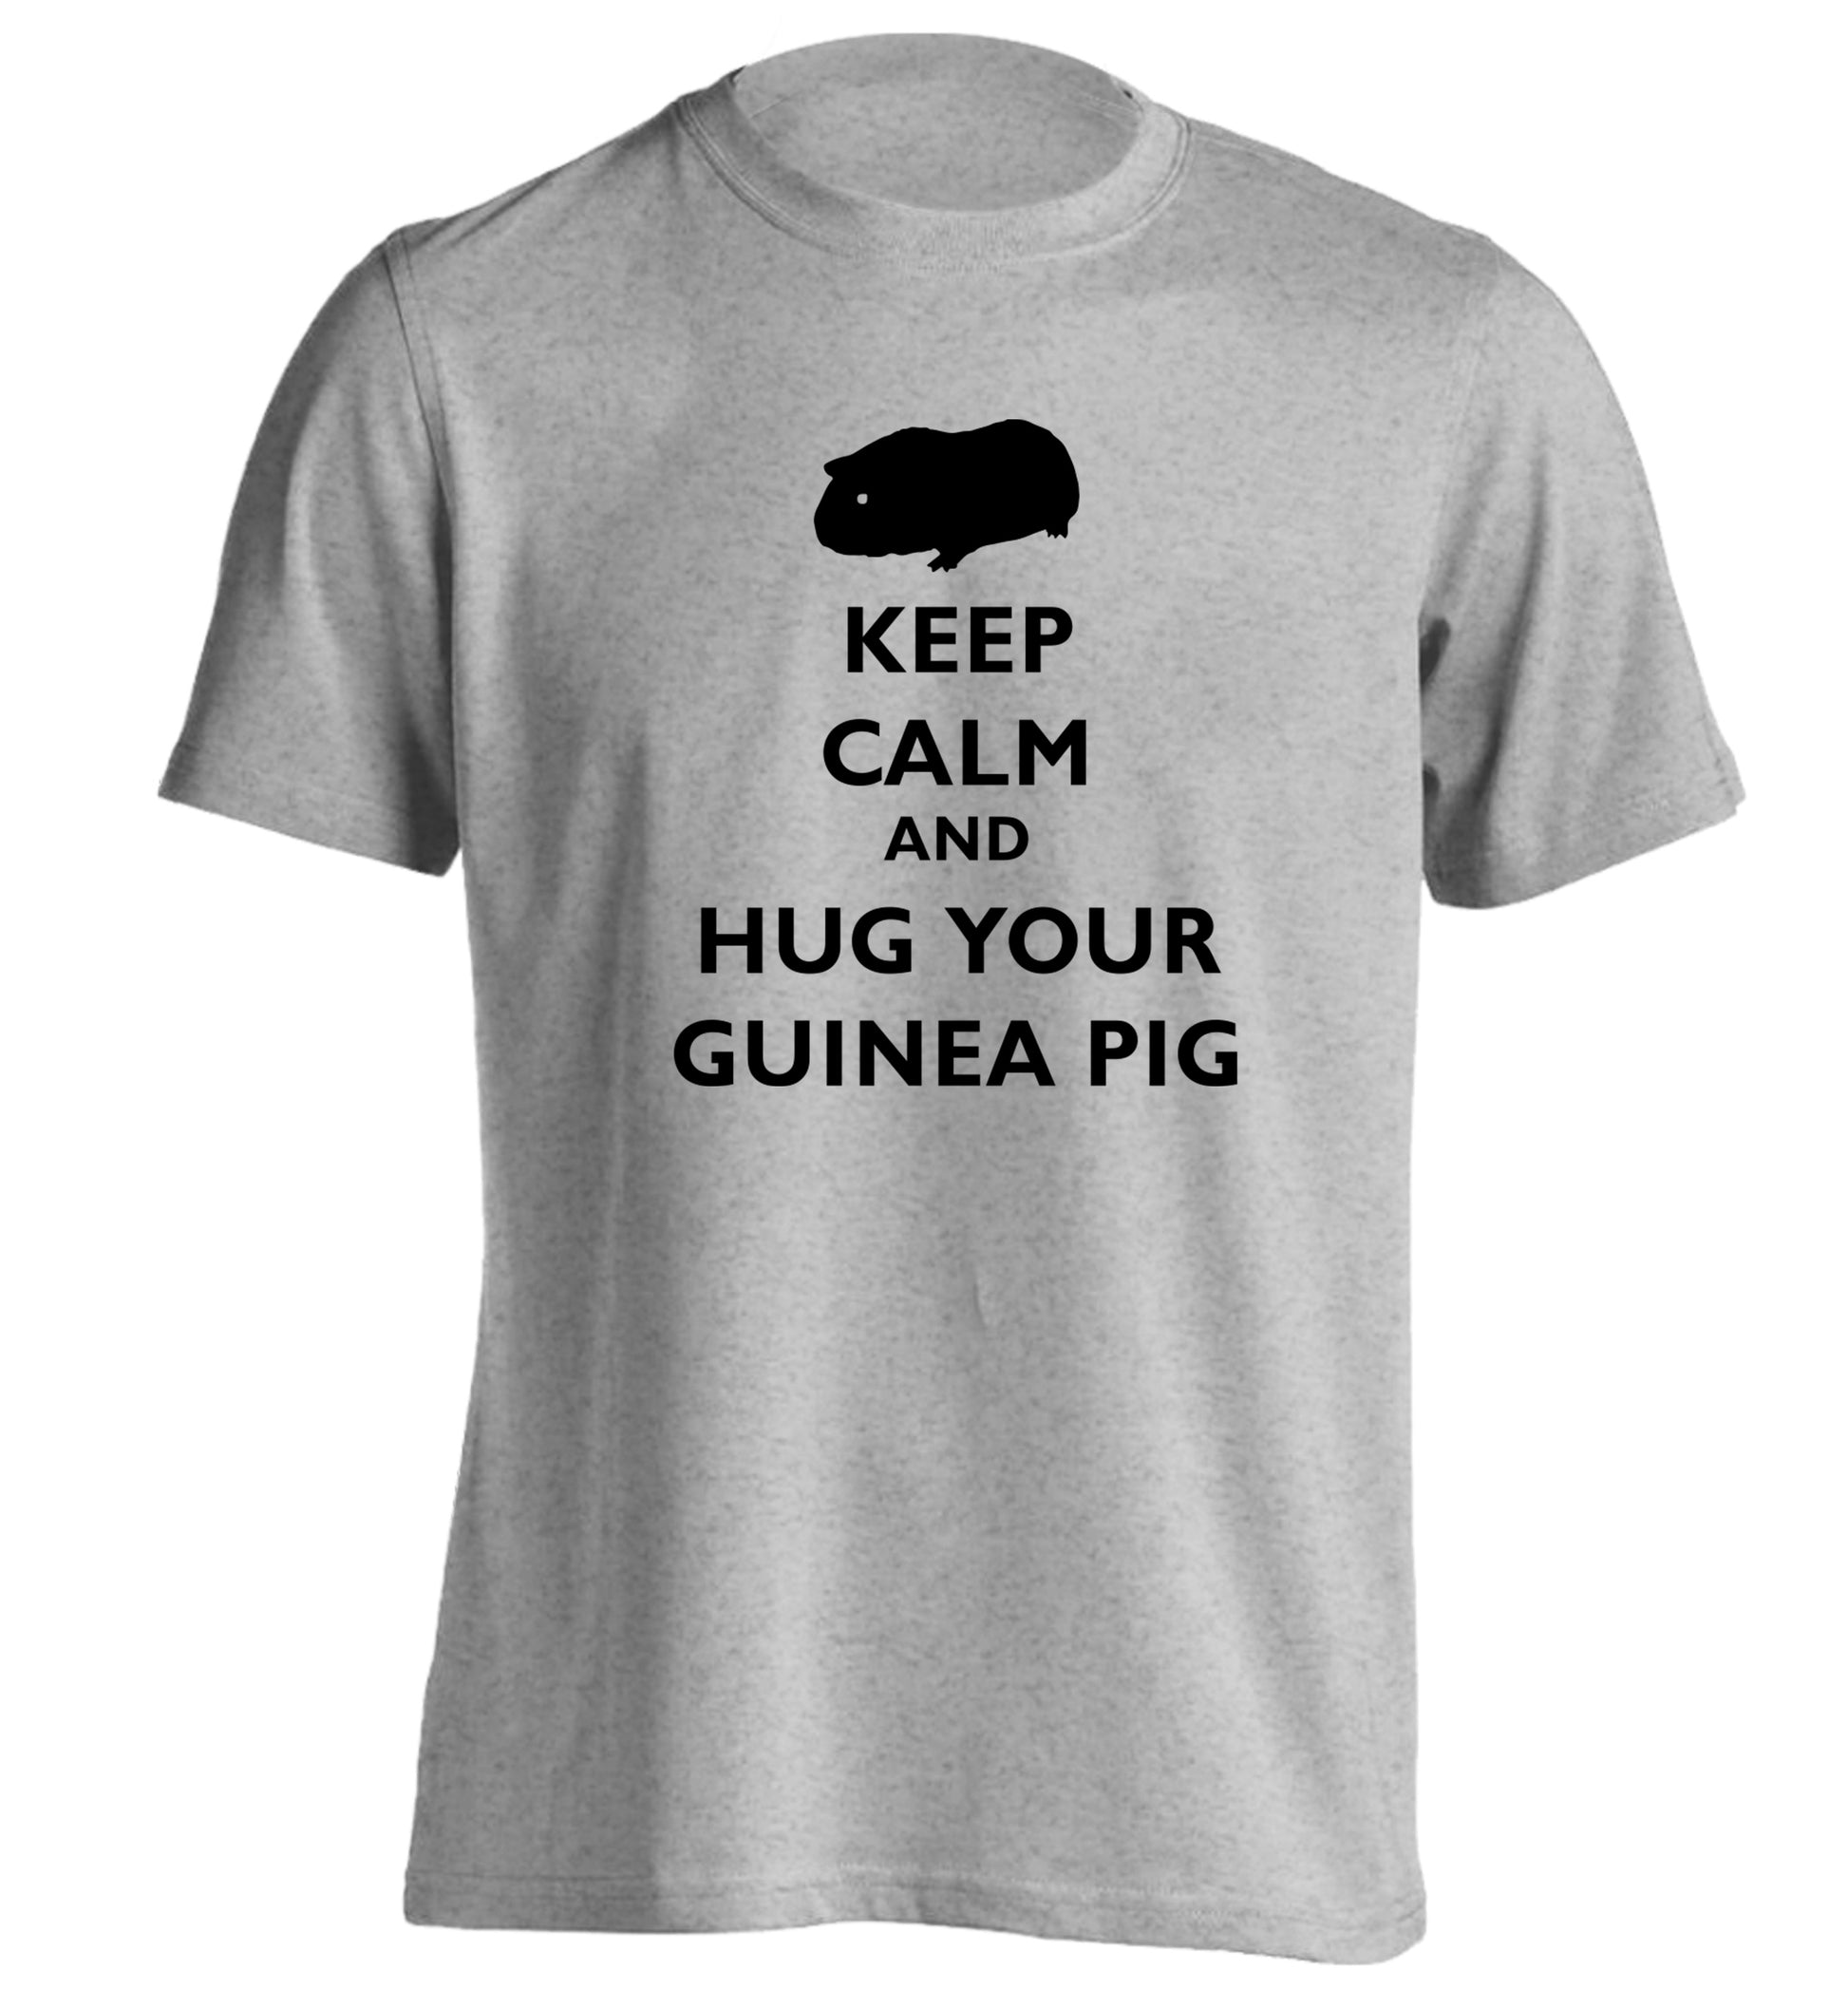 Keep calm and hug your guineapig adults unisex grey Tshirt 2XL